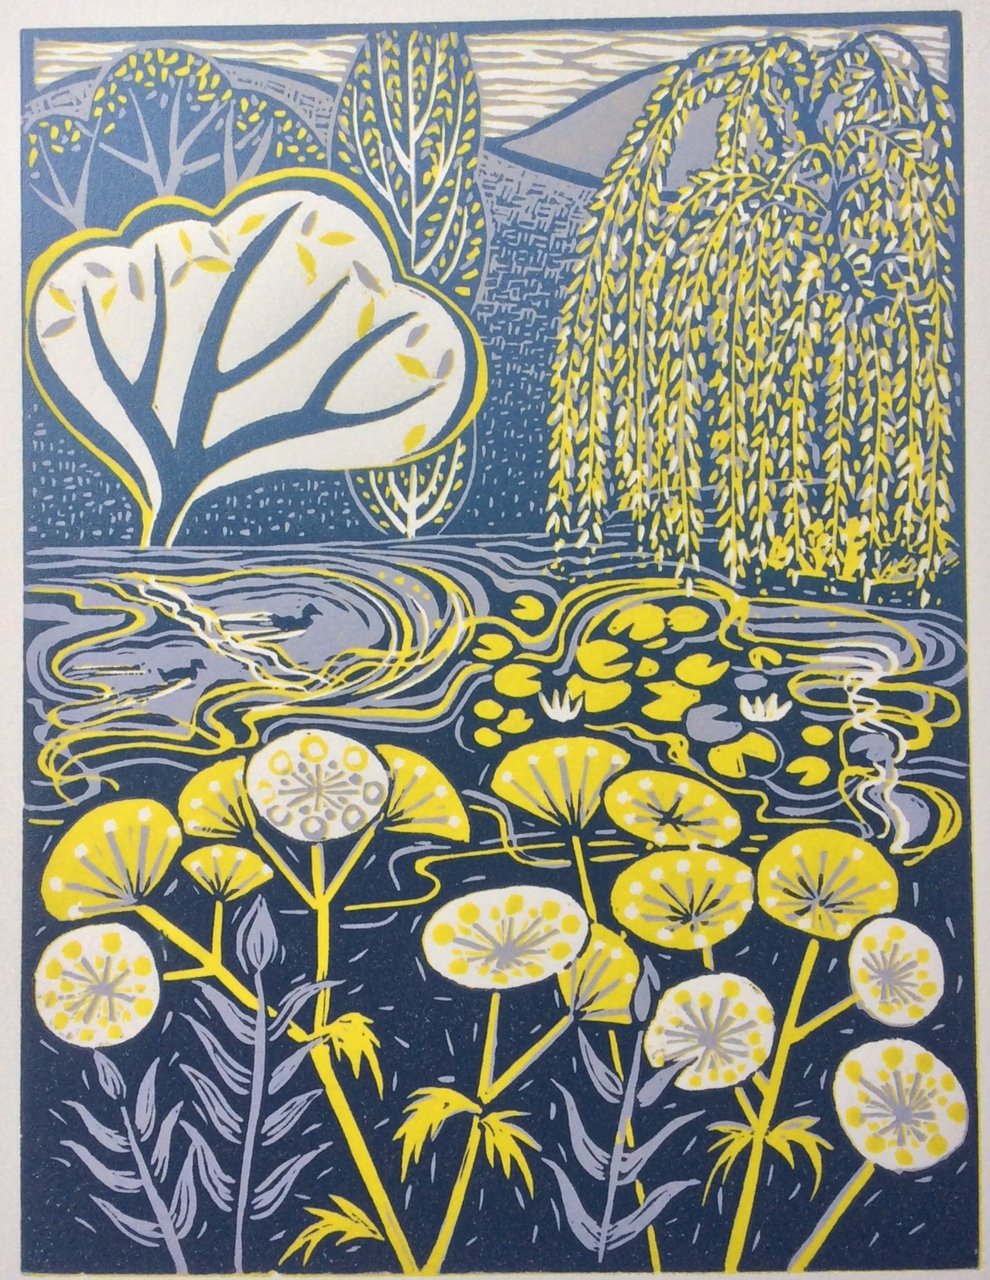 Diana Croft ‘Across the Pond’ Reduction Linocut image size 20x15cms.jpg